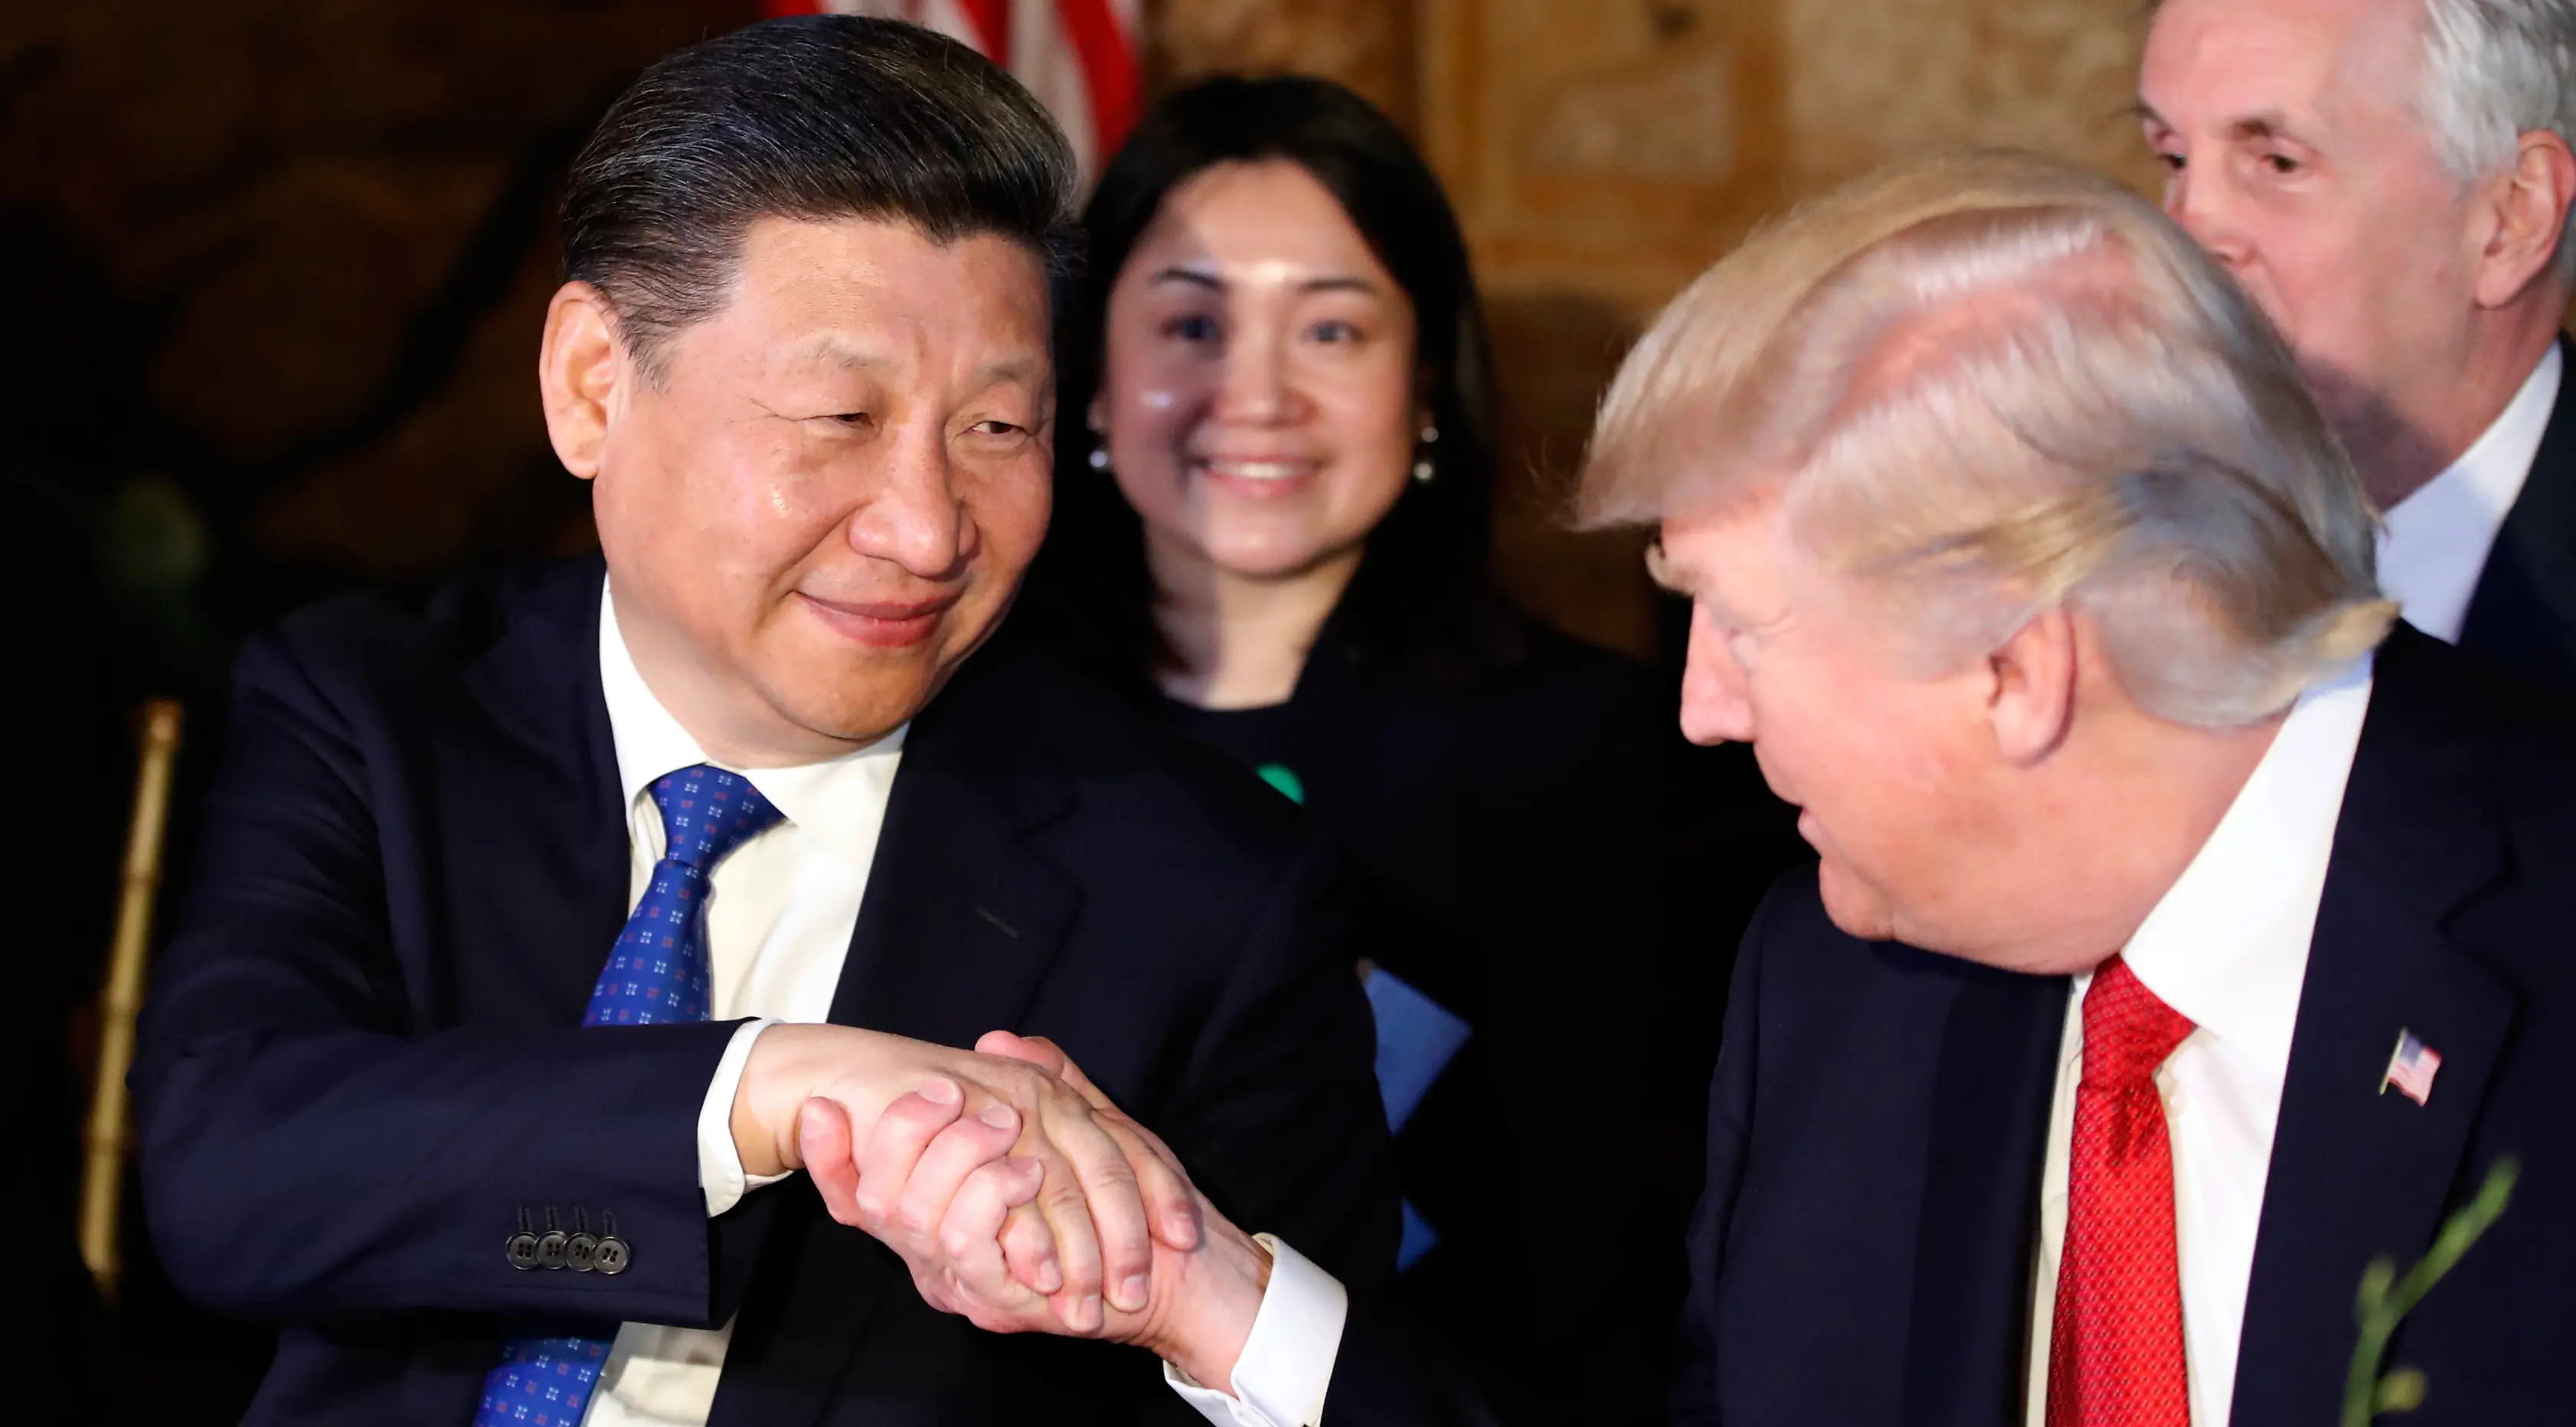 Presiden AS, Donald Trump menjabat tangan Presiden China, Xi Jinping saat jamuan makan malam di resor Mar a Lago, Florida, Kamis (6/4). Kedua pemimpin negara tersebut diagendakan akan menghabiskan waktu bersama secara privat. (AP Photo/Alex Brandon)